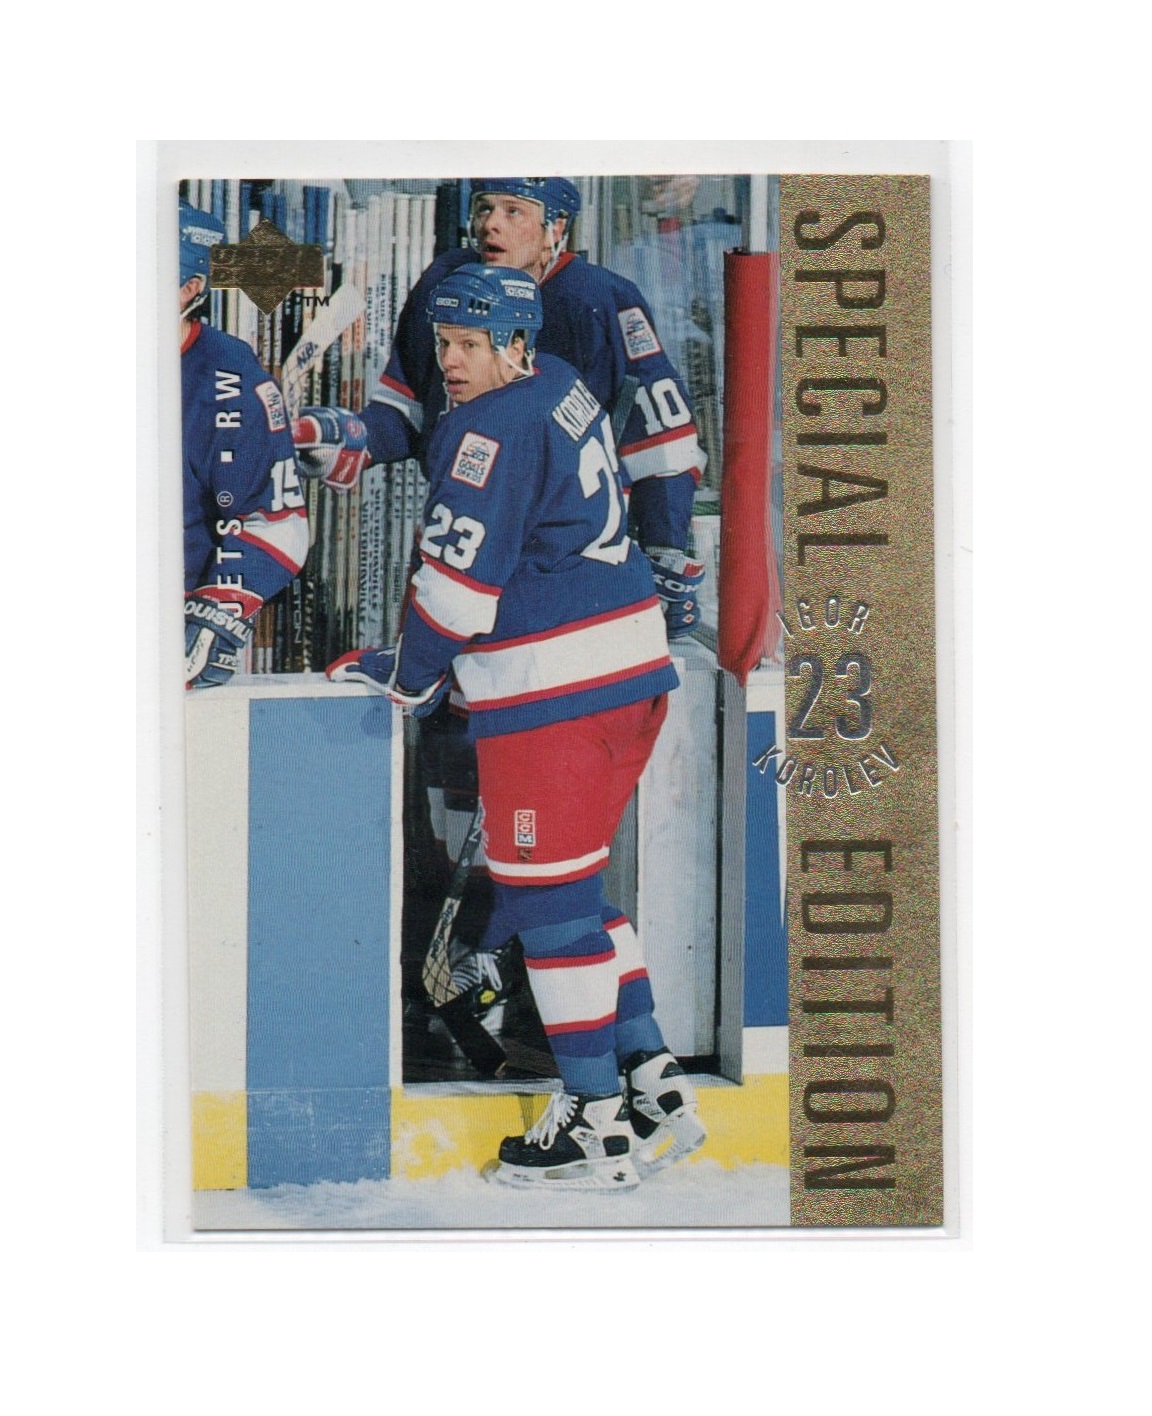 1995-96 Upper Deck Special Edition Gold #SE90 Igor Korolev (15-X243-NHLJETS)